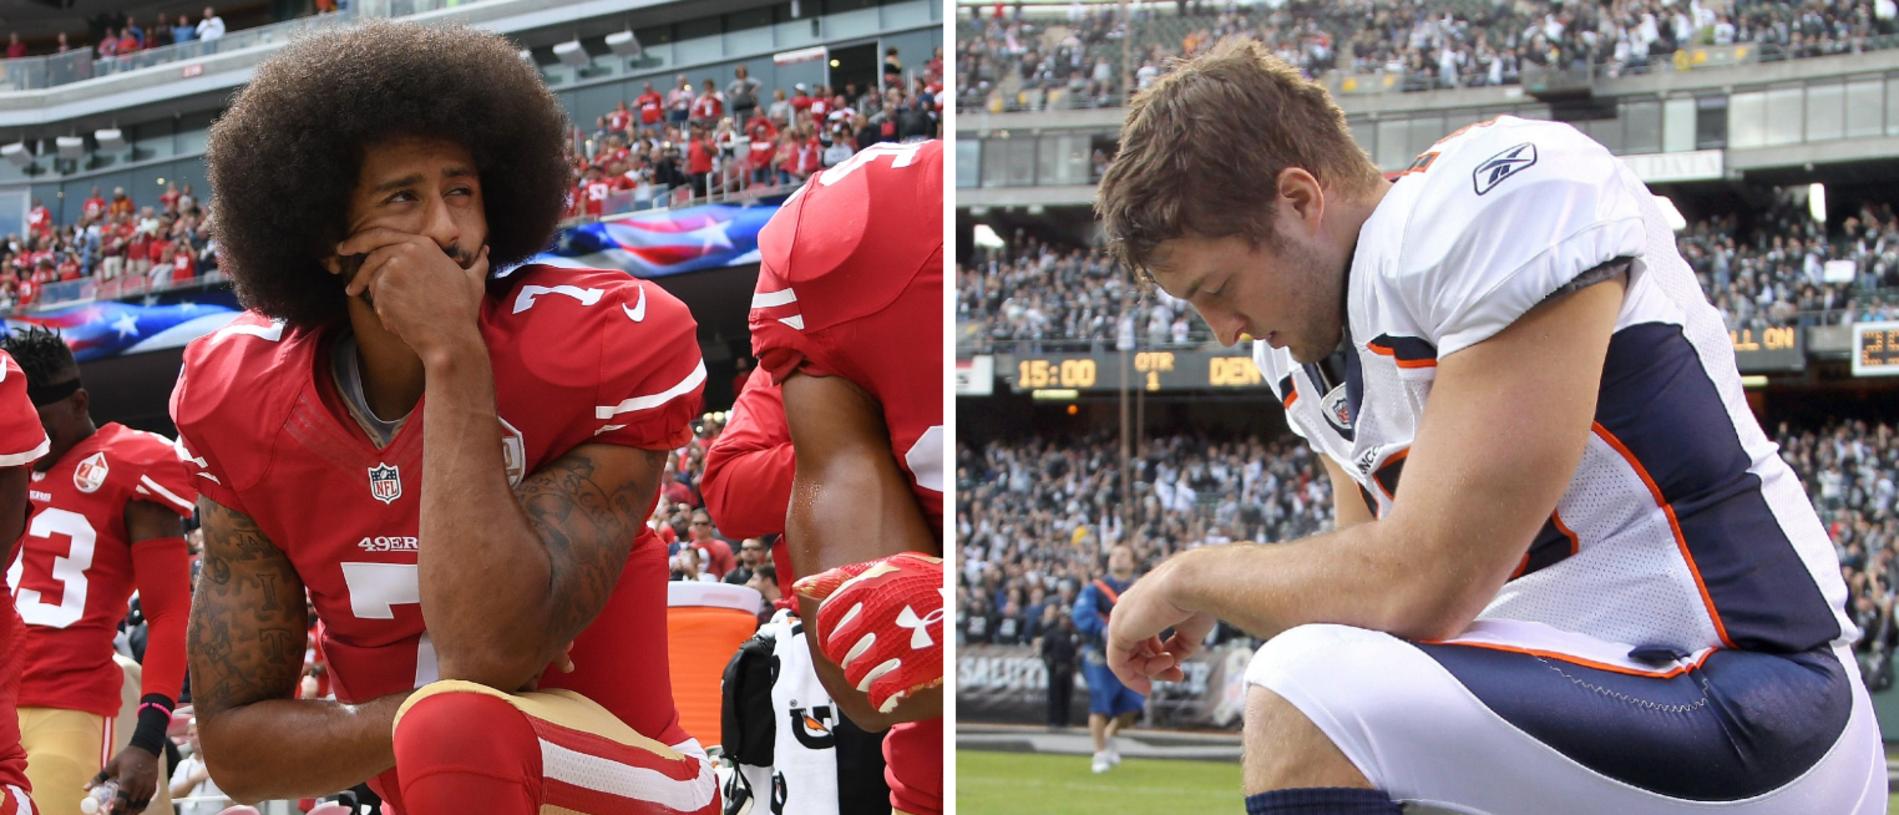 NFL Tim Tebow, Colin Kaepernick, hypocrisy, social media reaction, Jacksonville Jaguars, kneeling protest